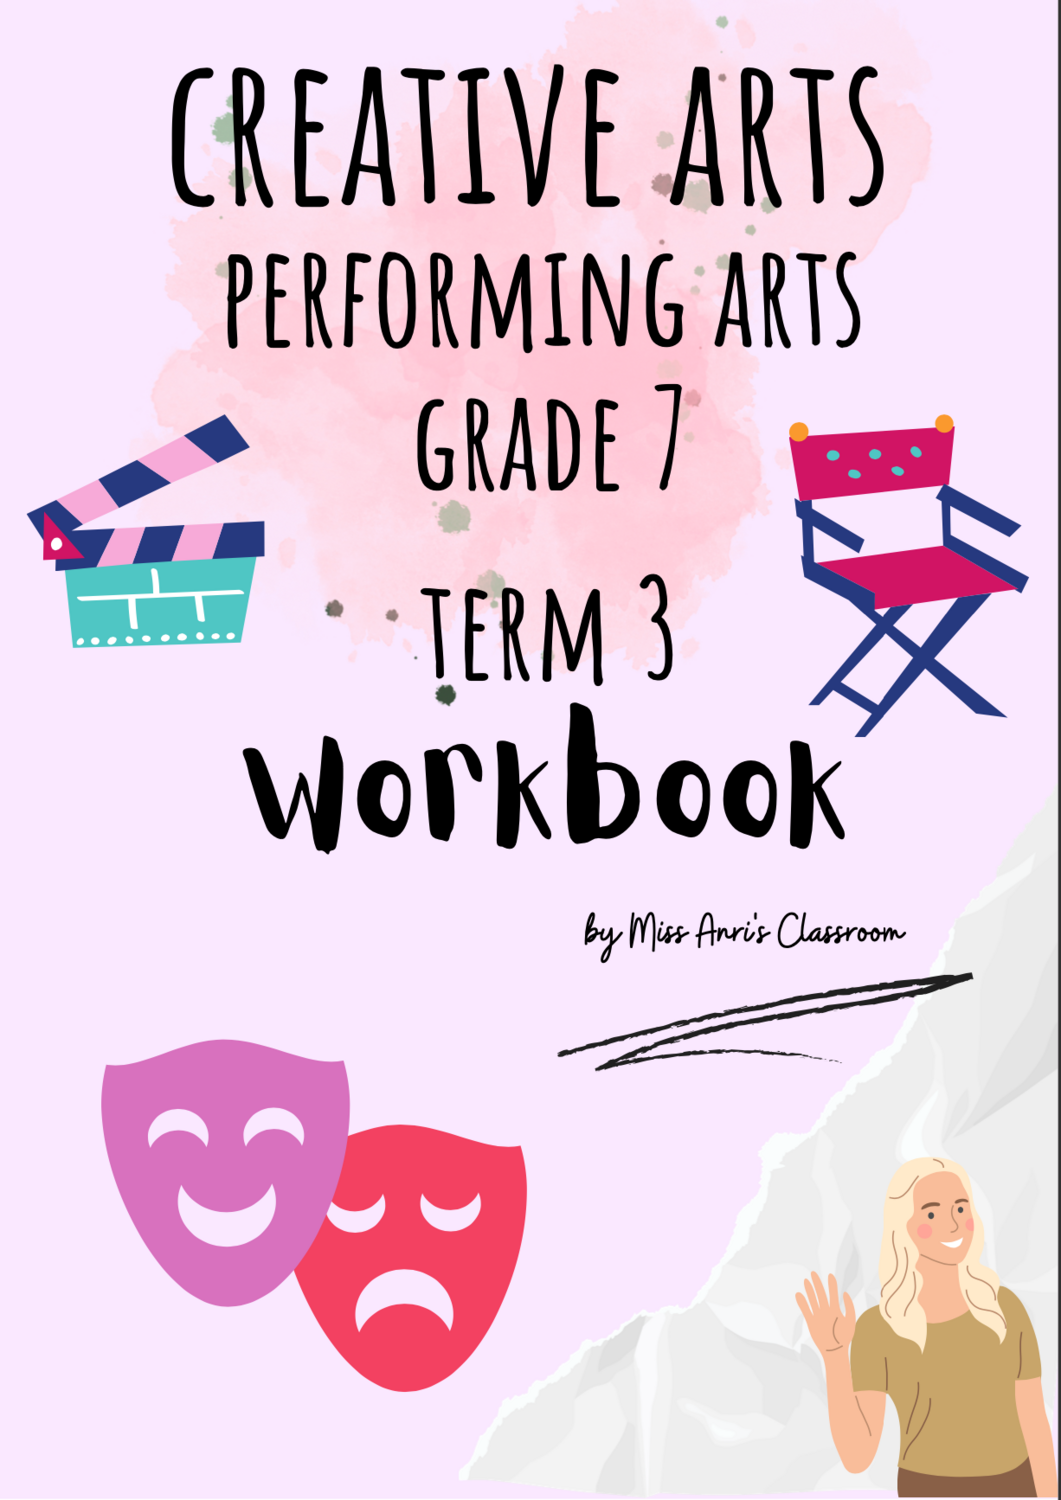 Grade 7 Creative Arts (Performing Arts) term 3 workbook